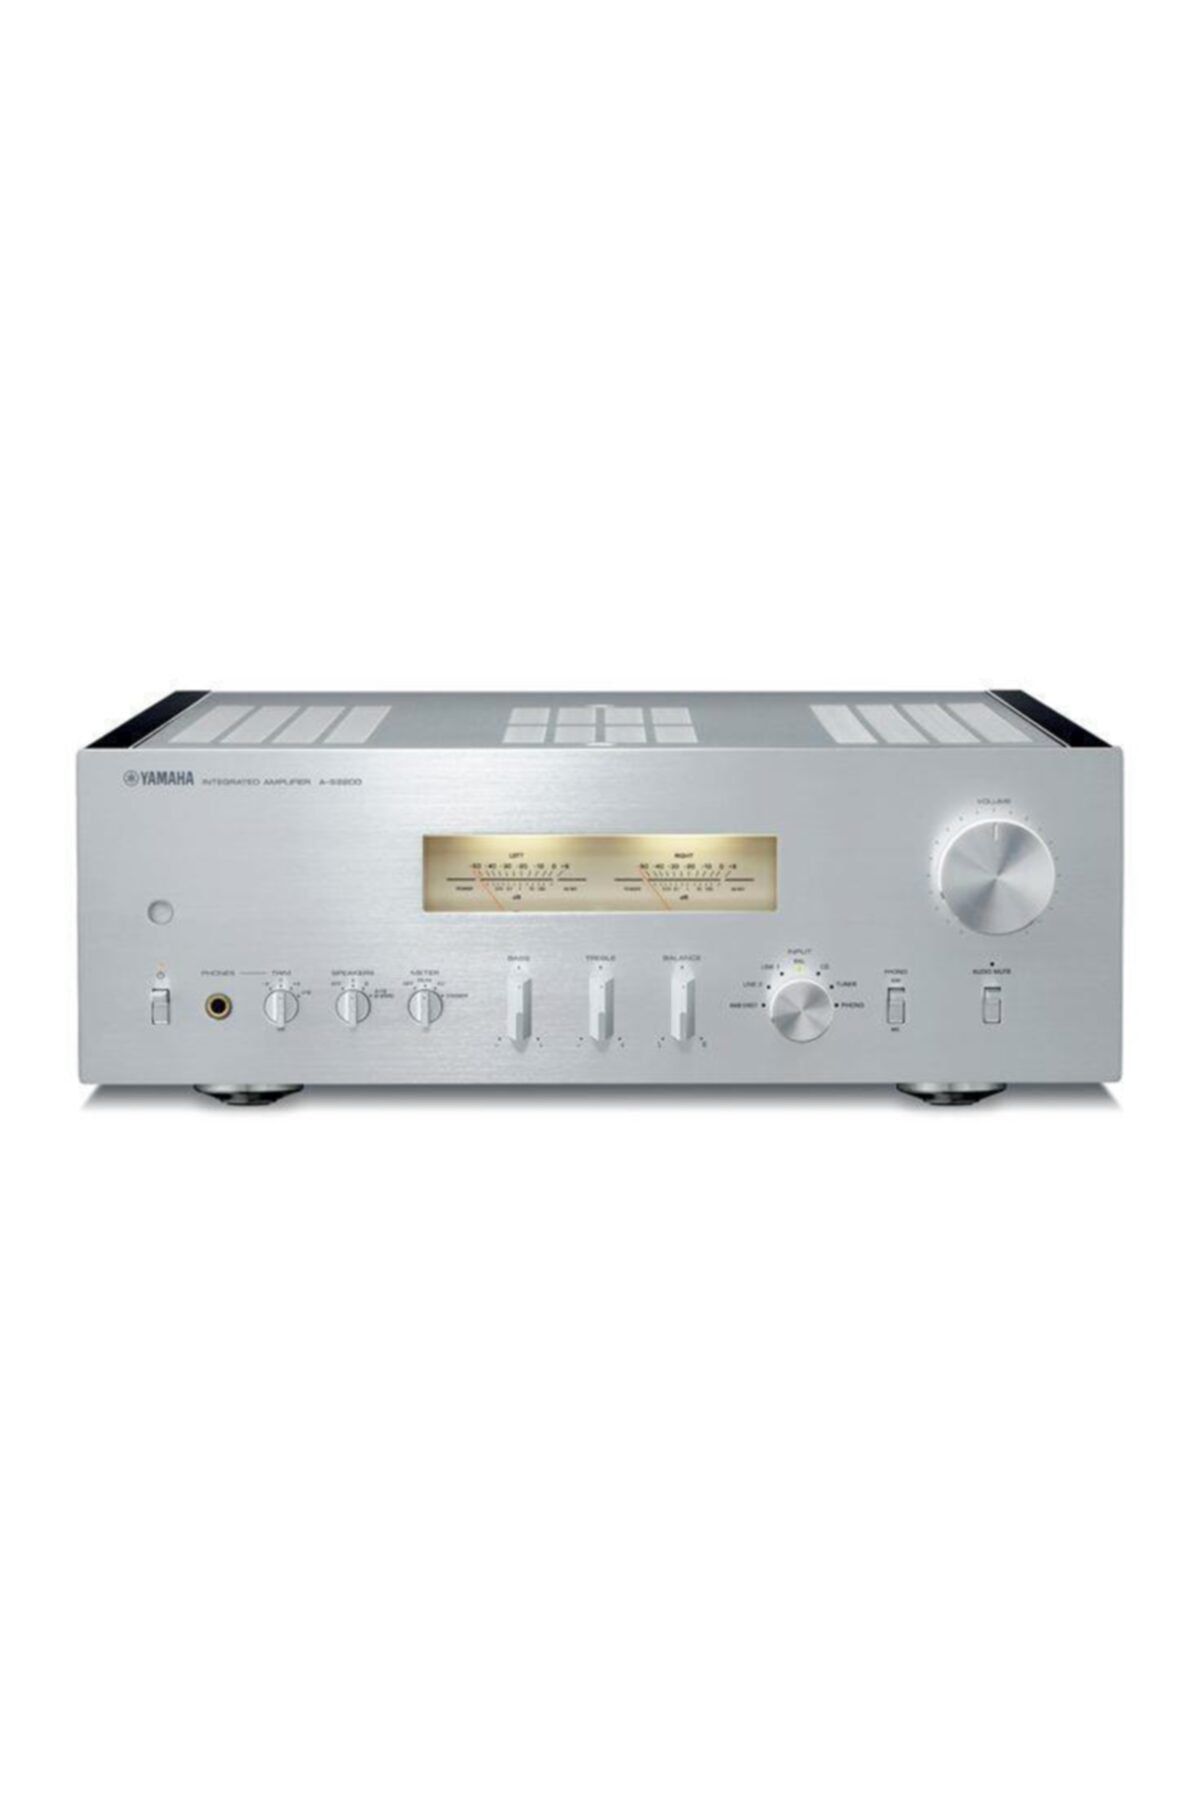 Yamaha As 2200 Stereo Amplifier